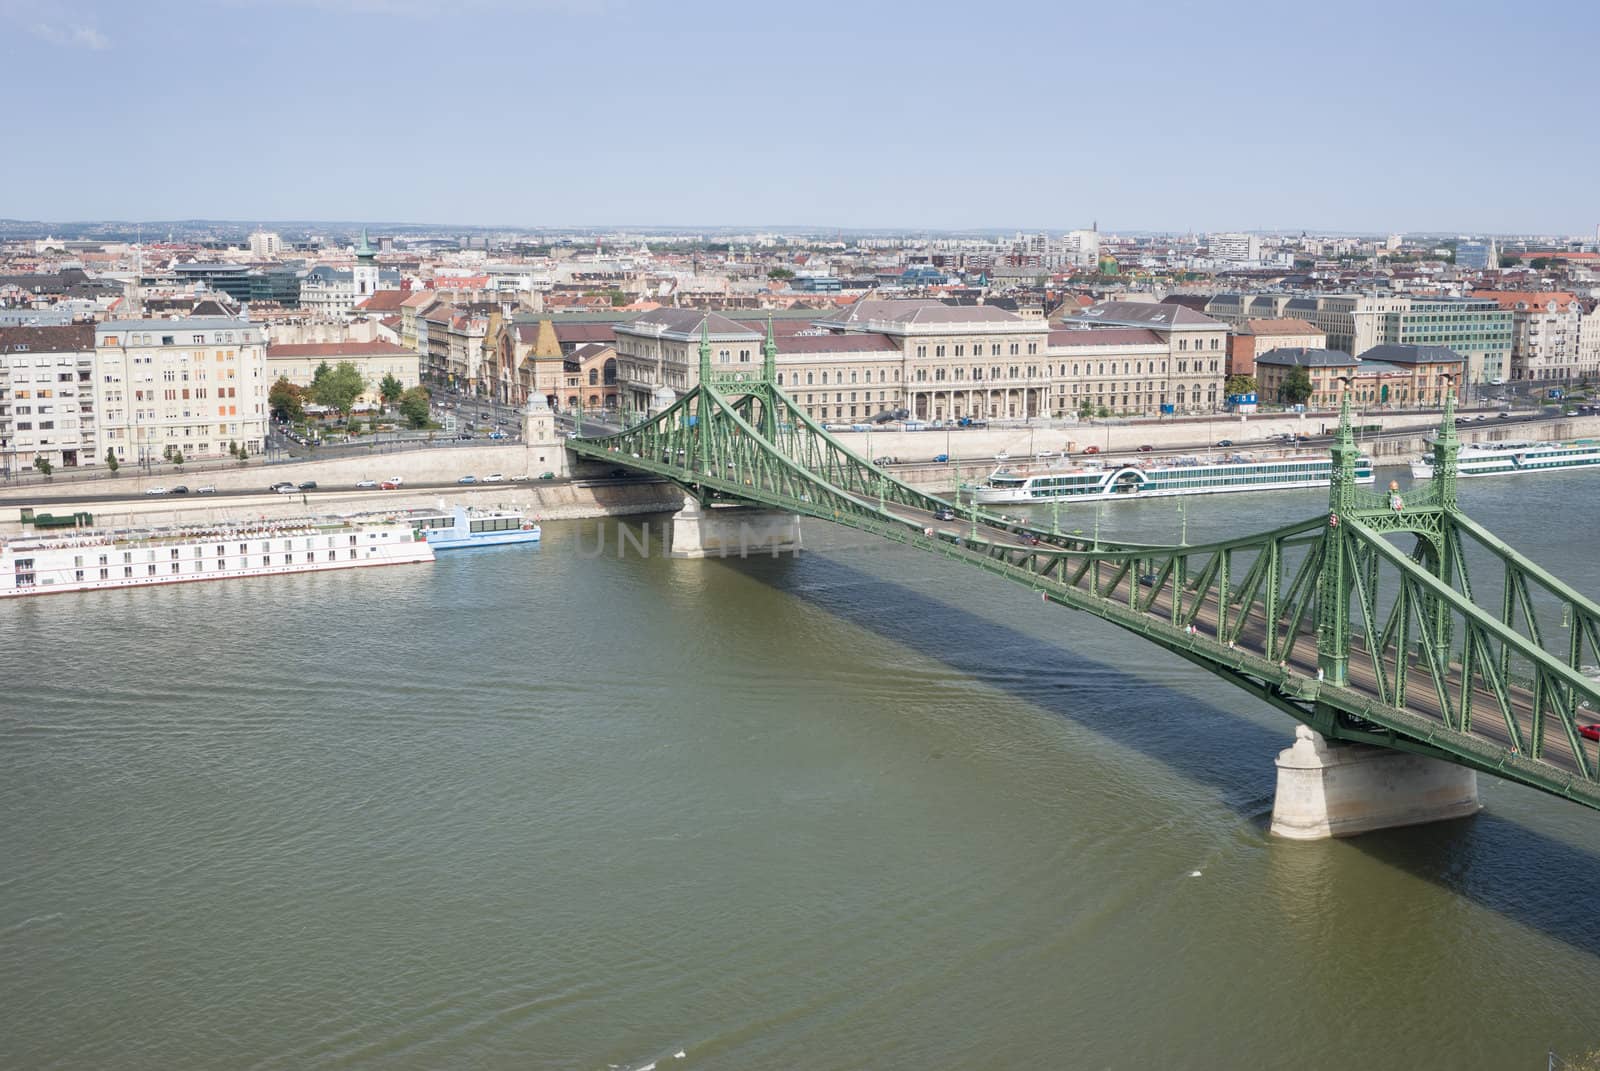 Danube river with Liberty Bridge and boats by domenicosalice